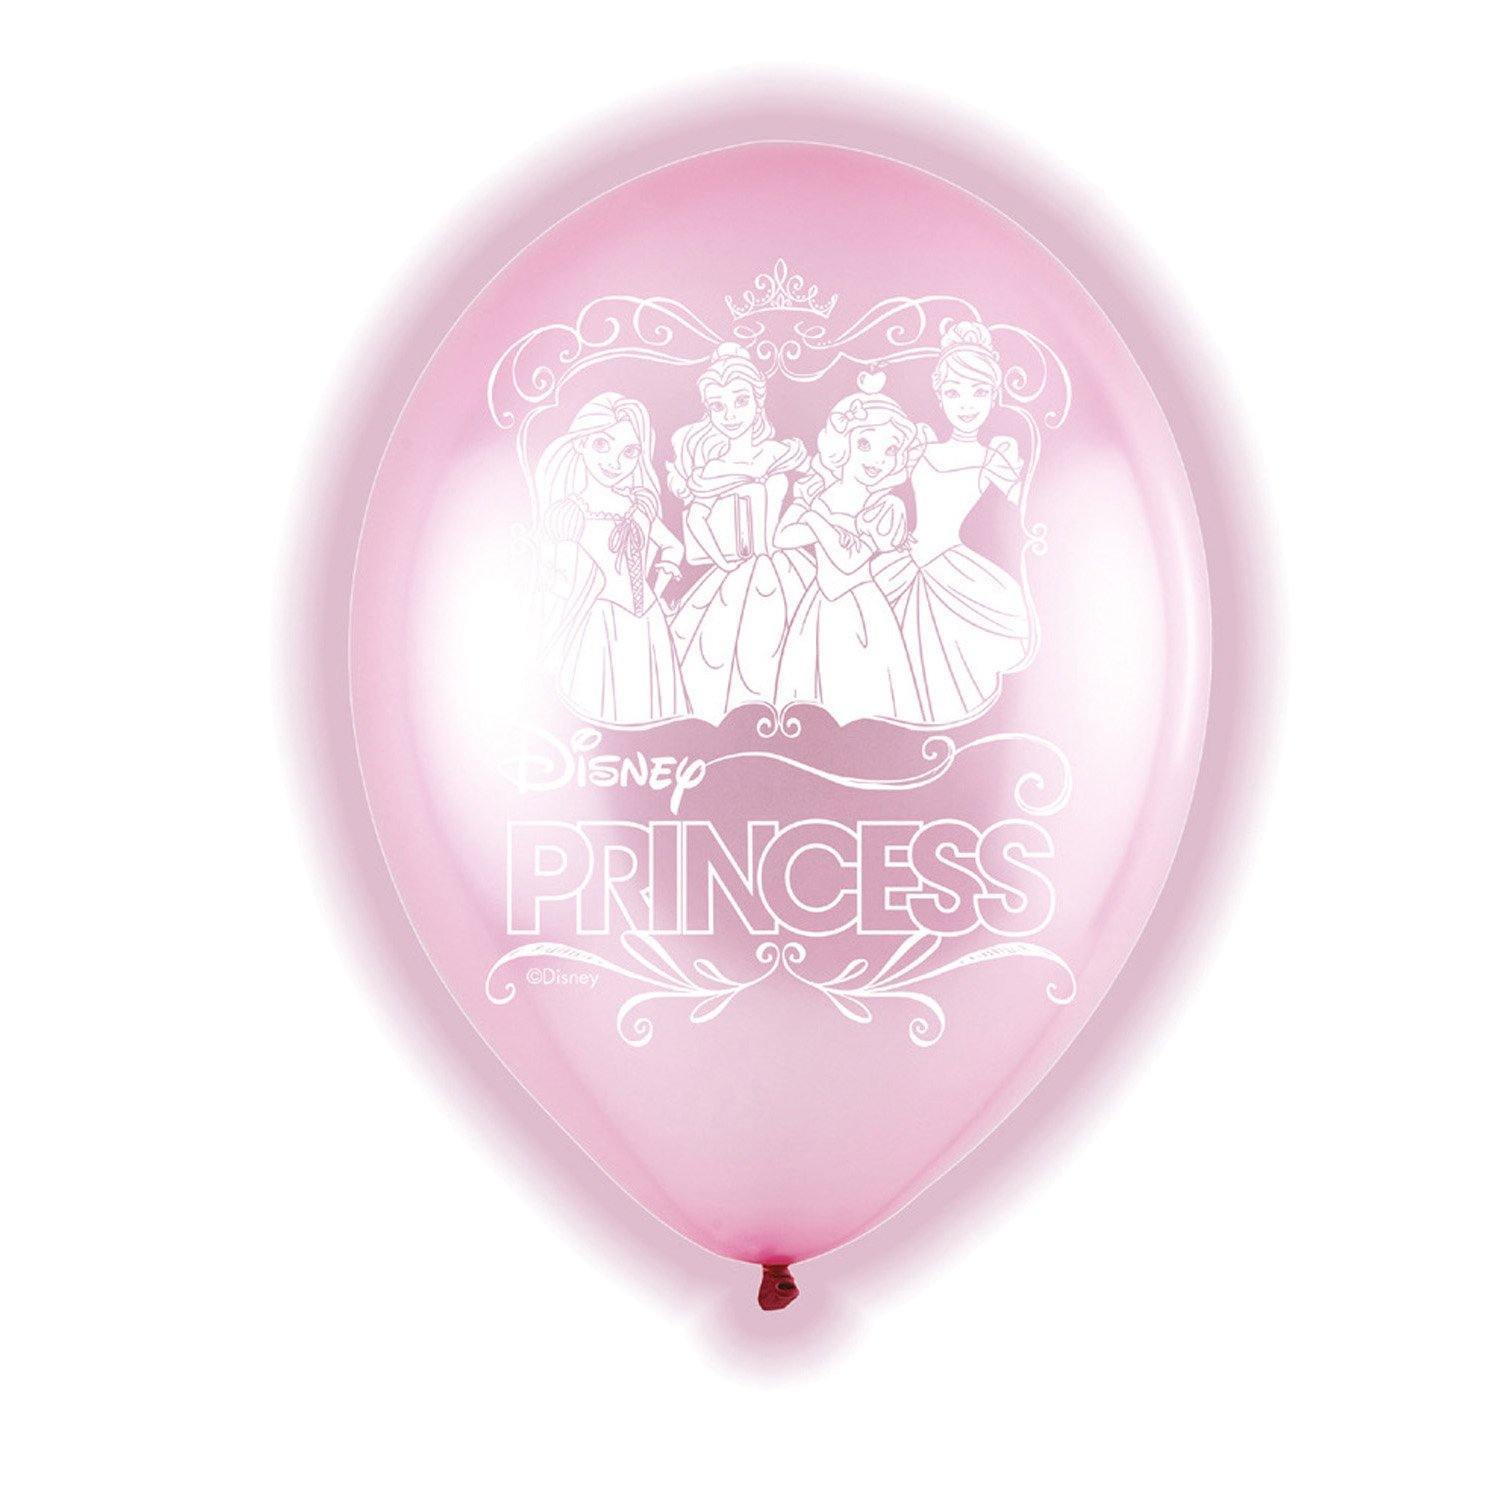 LED Disney prinsesse balloner - lyserøde, 5 stk 27 cm